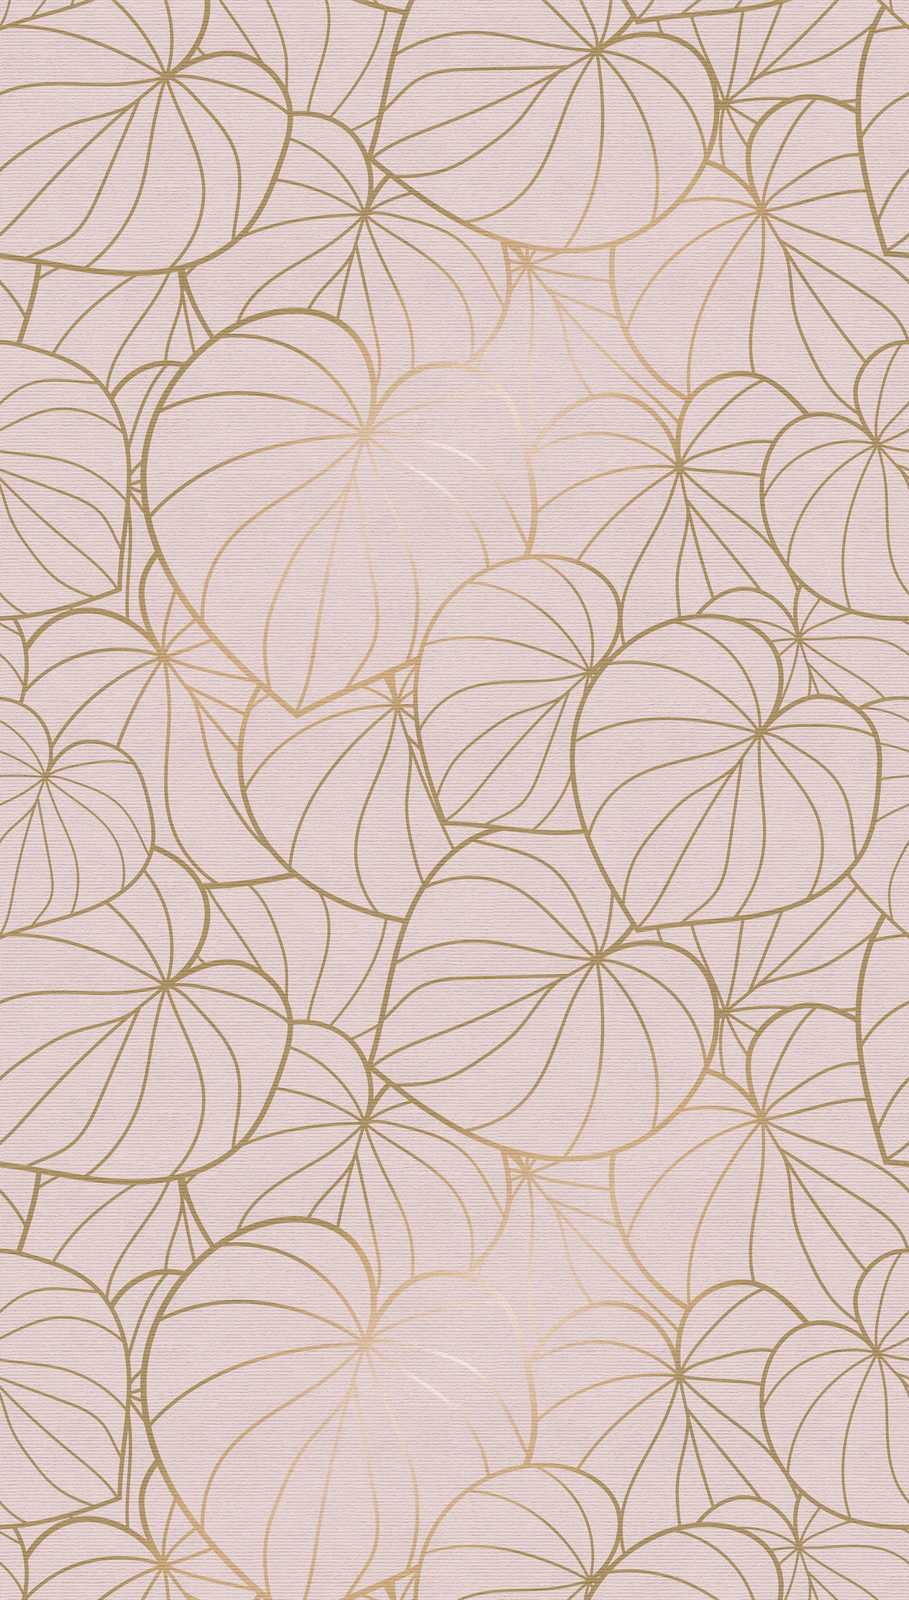             Wallpaper novelty | motif wallpaper leaves motif gold & beige line art
        